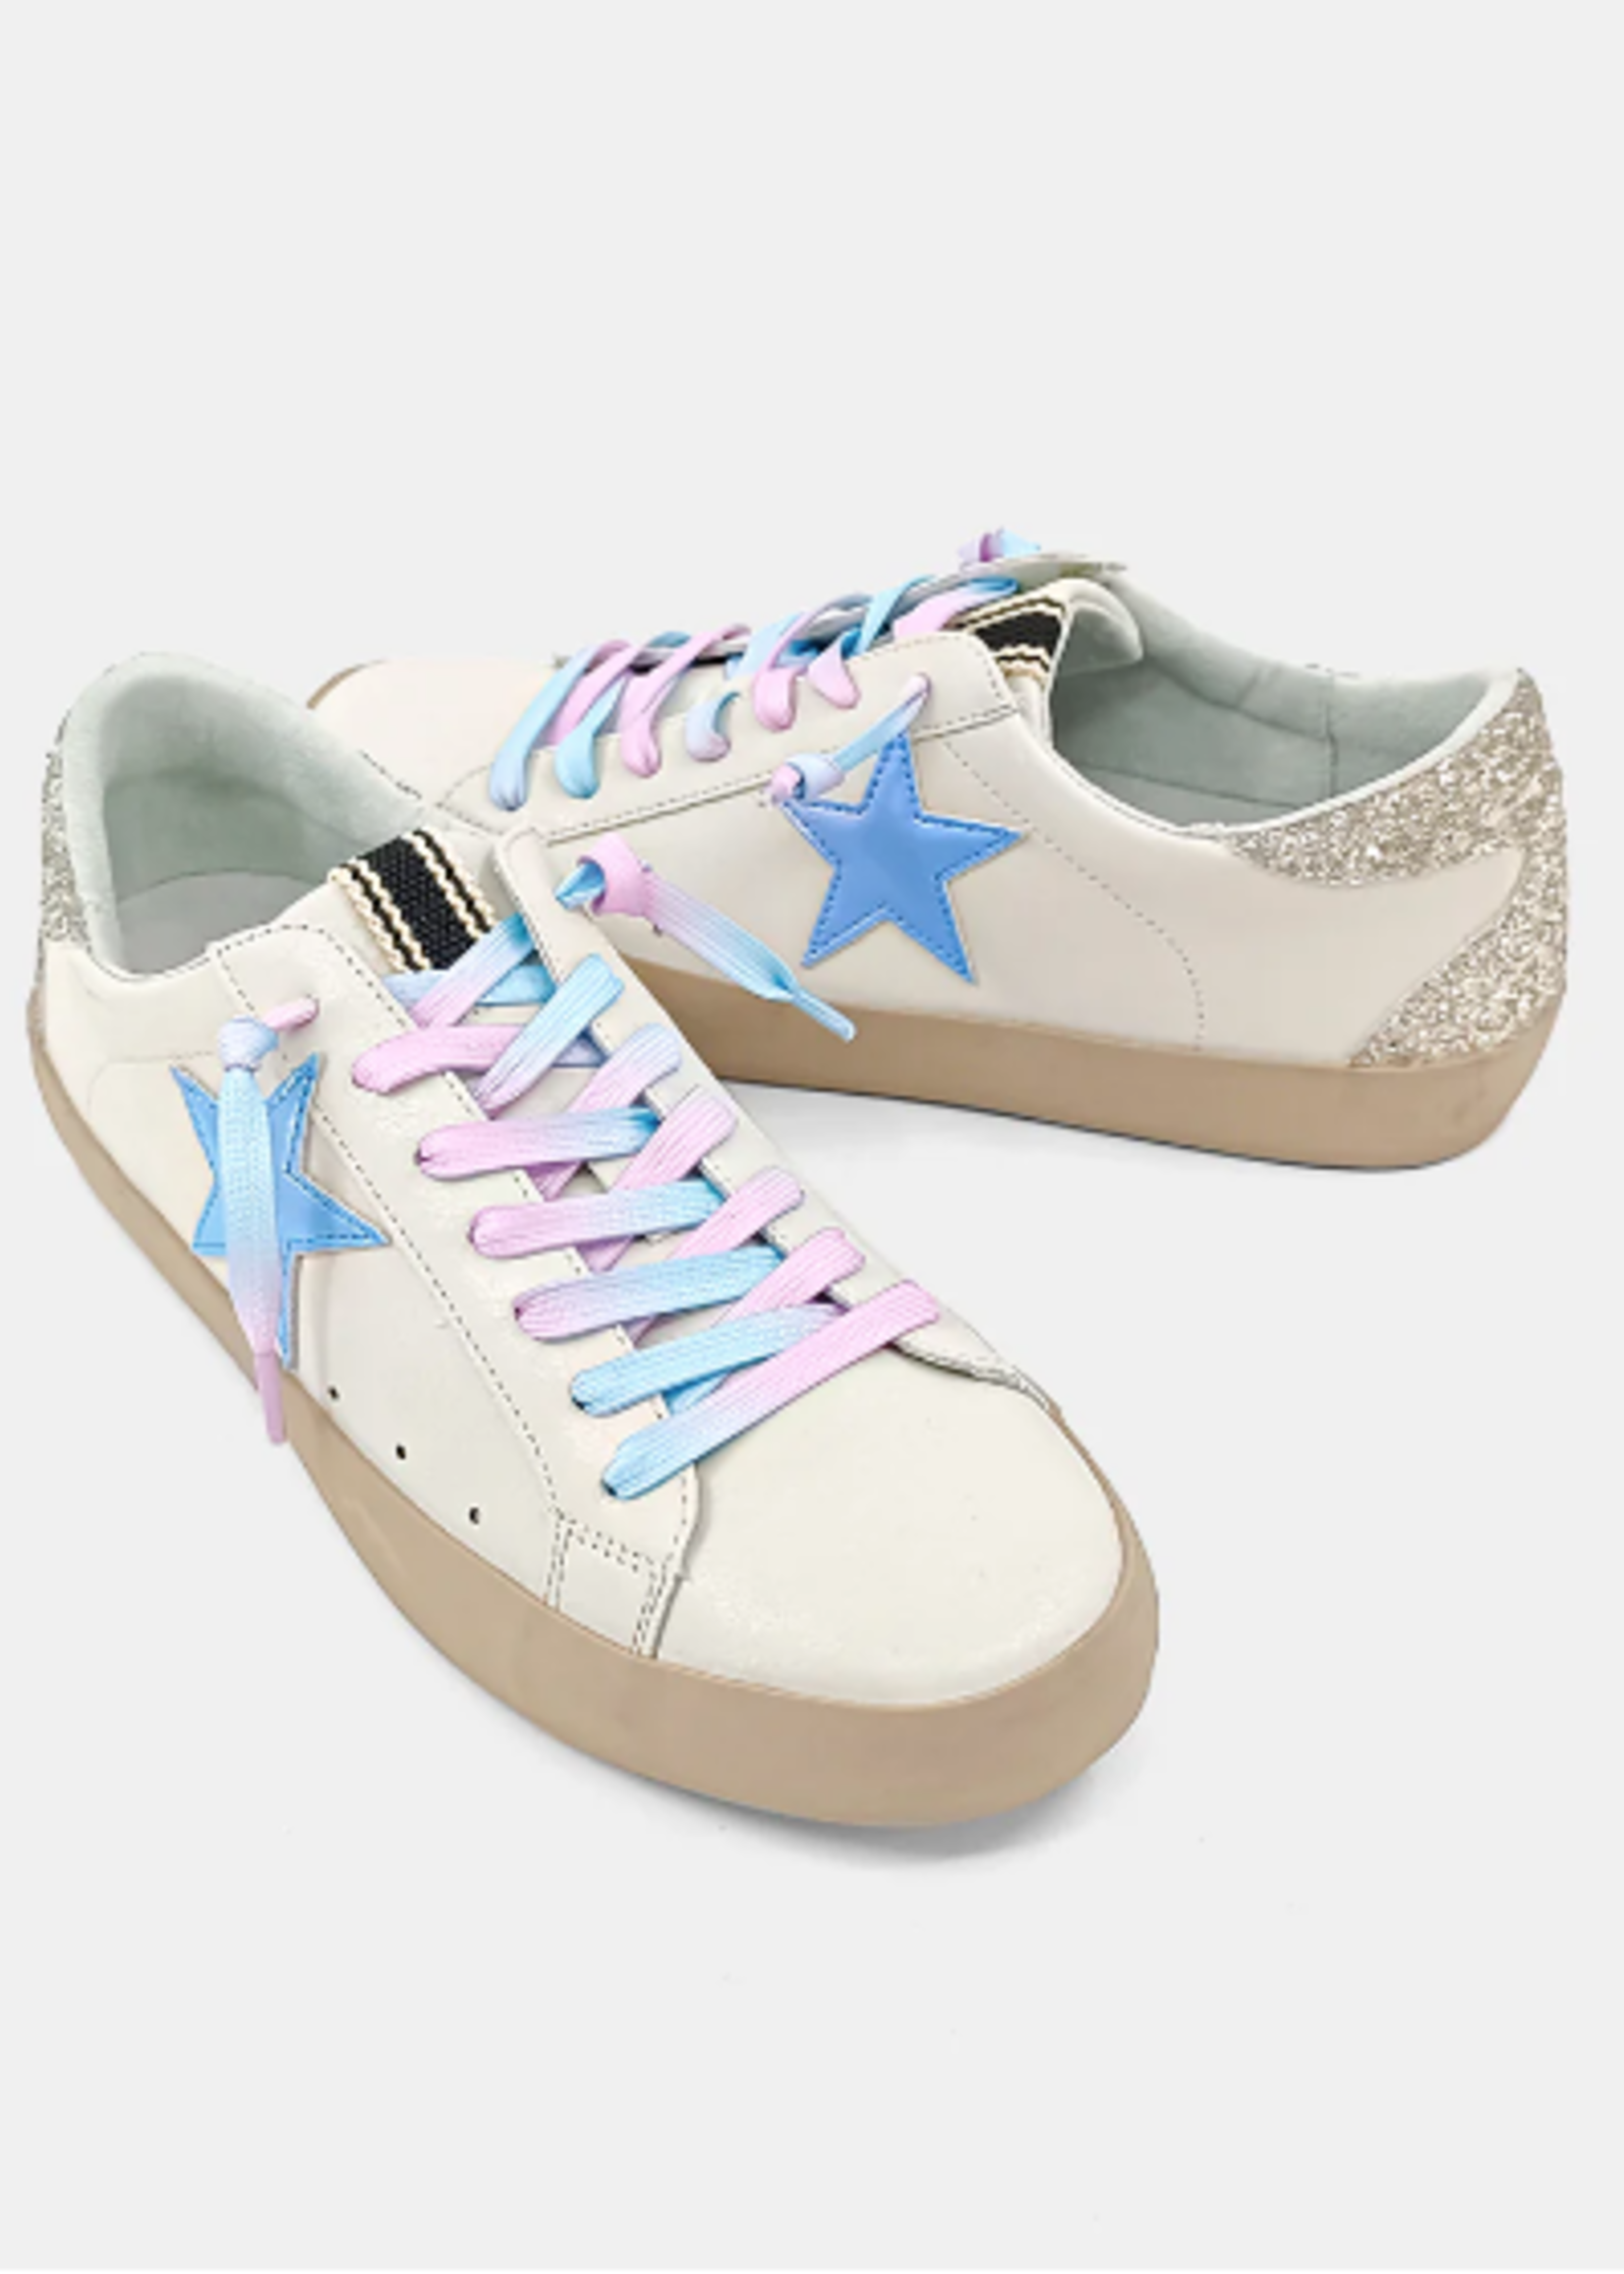 Paula Metallic Blue Sneakers